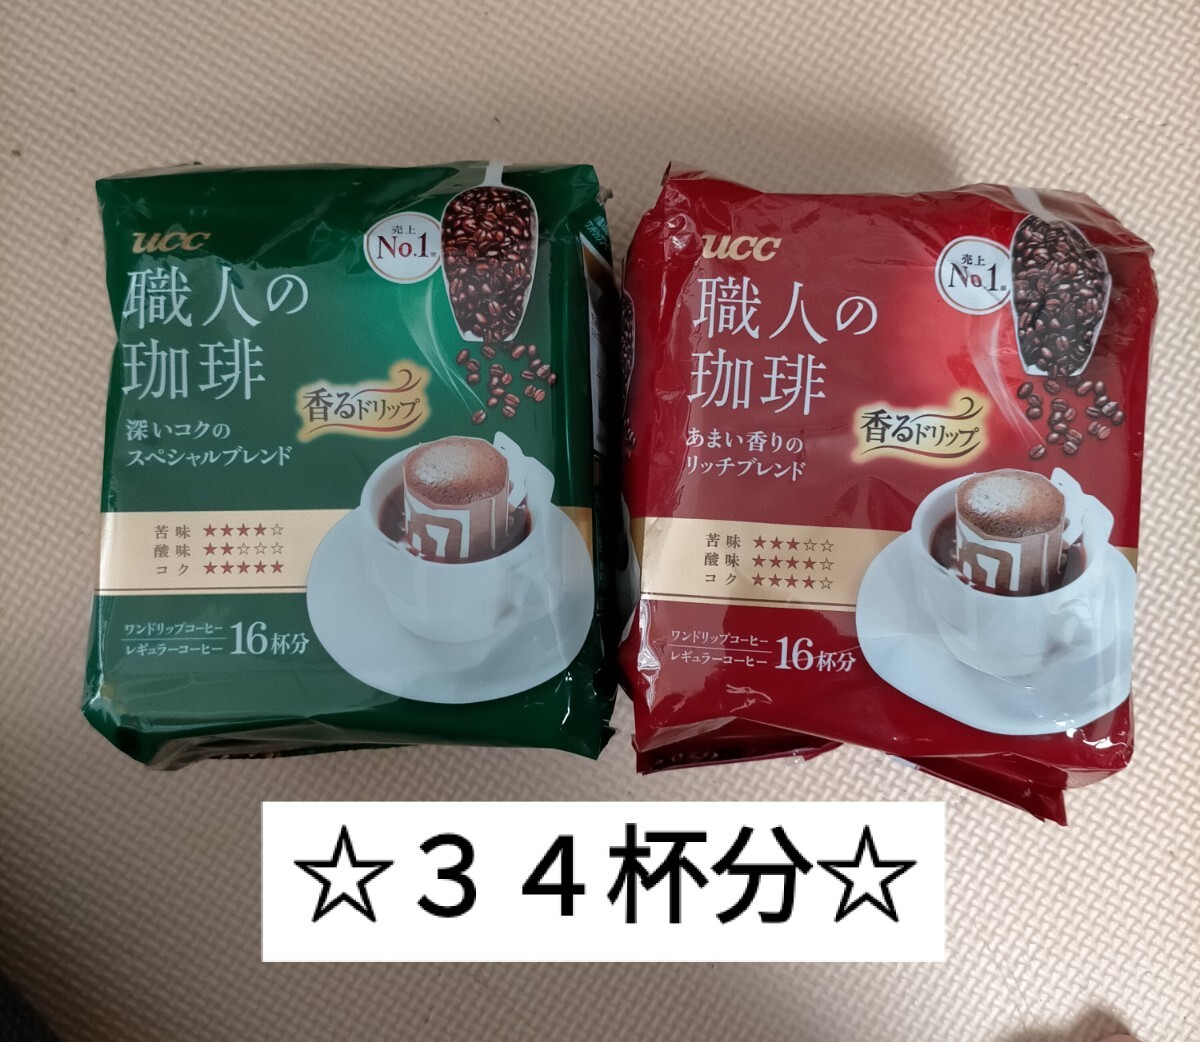 UCC 職人の珈琲 ワンドリップ レギュラーコーヒー 34杯分 スペシャル・リッチブレンド☆ インスタントも出品中